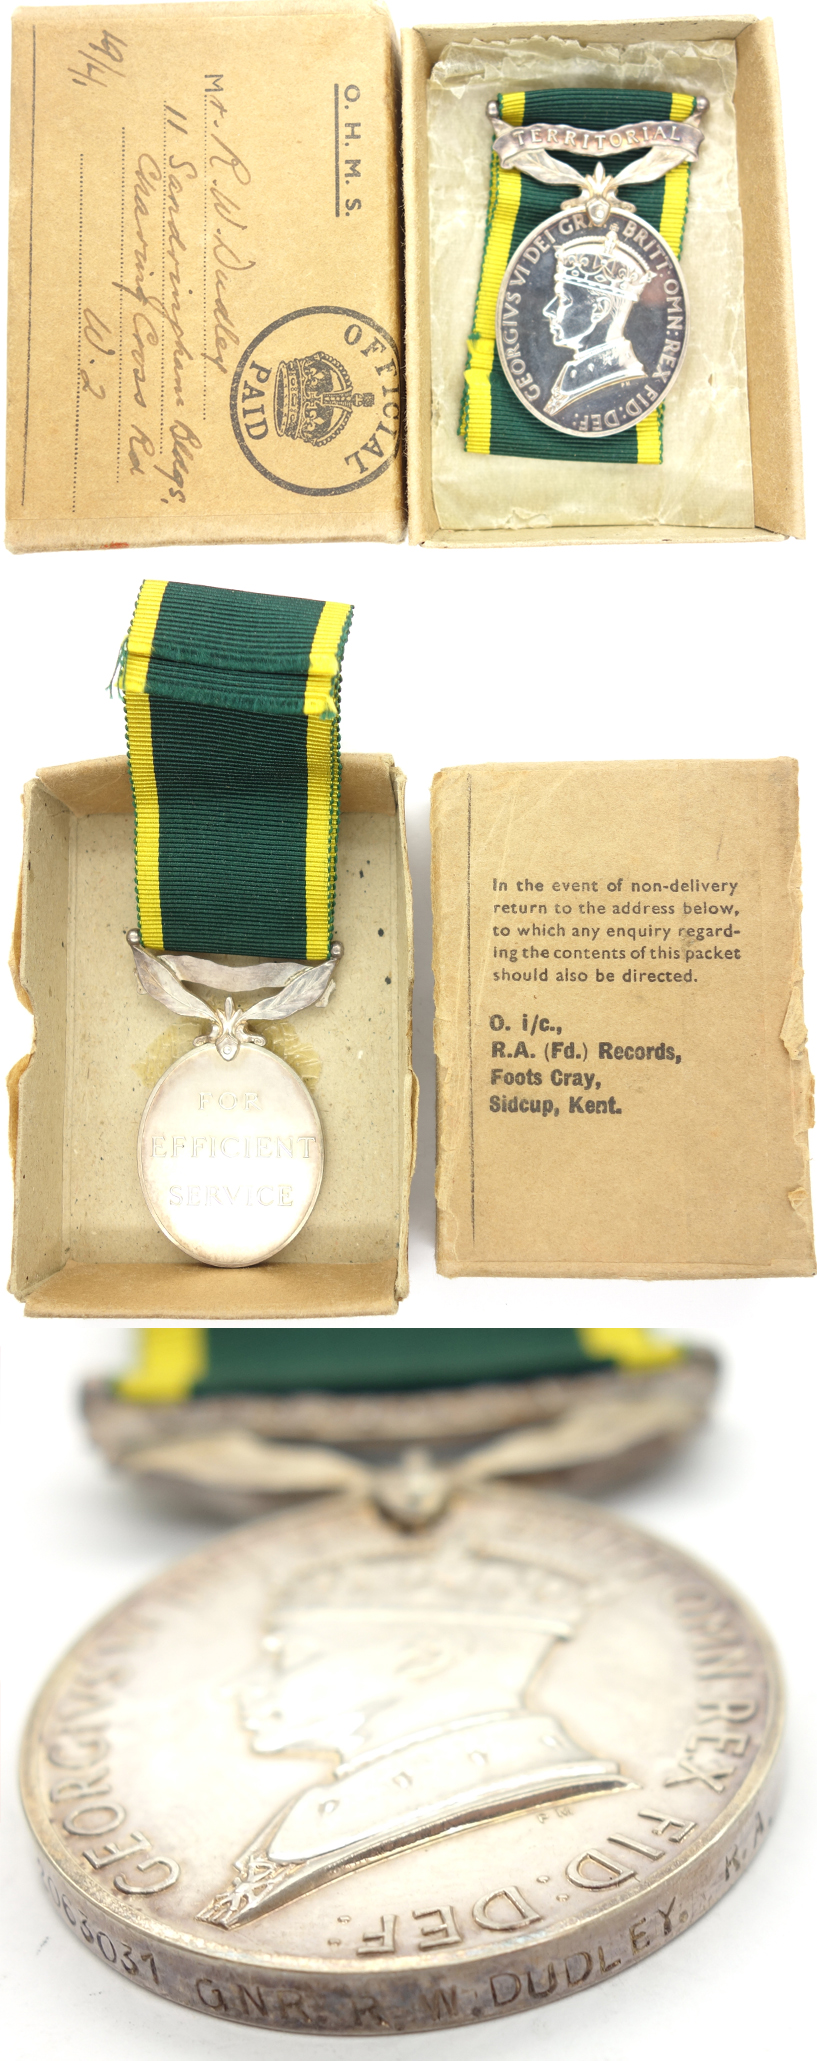 R.W. Duleys' Efficiency Medal in issue box